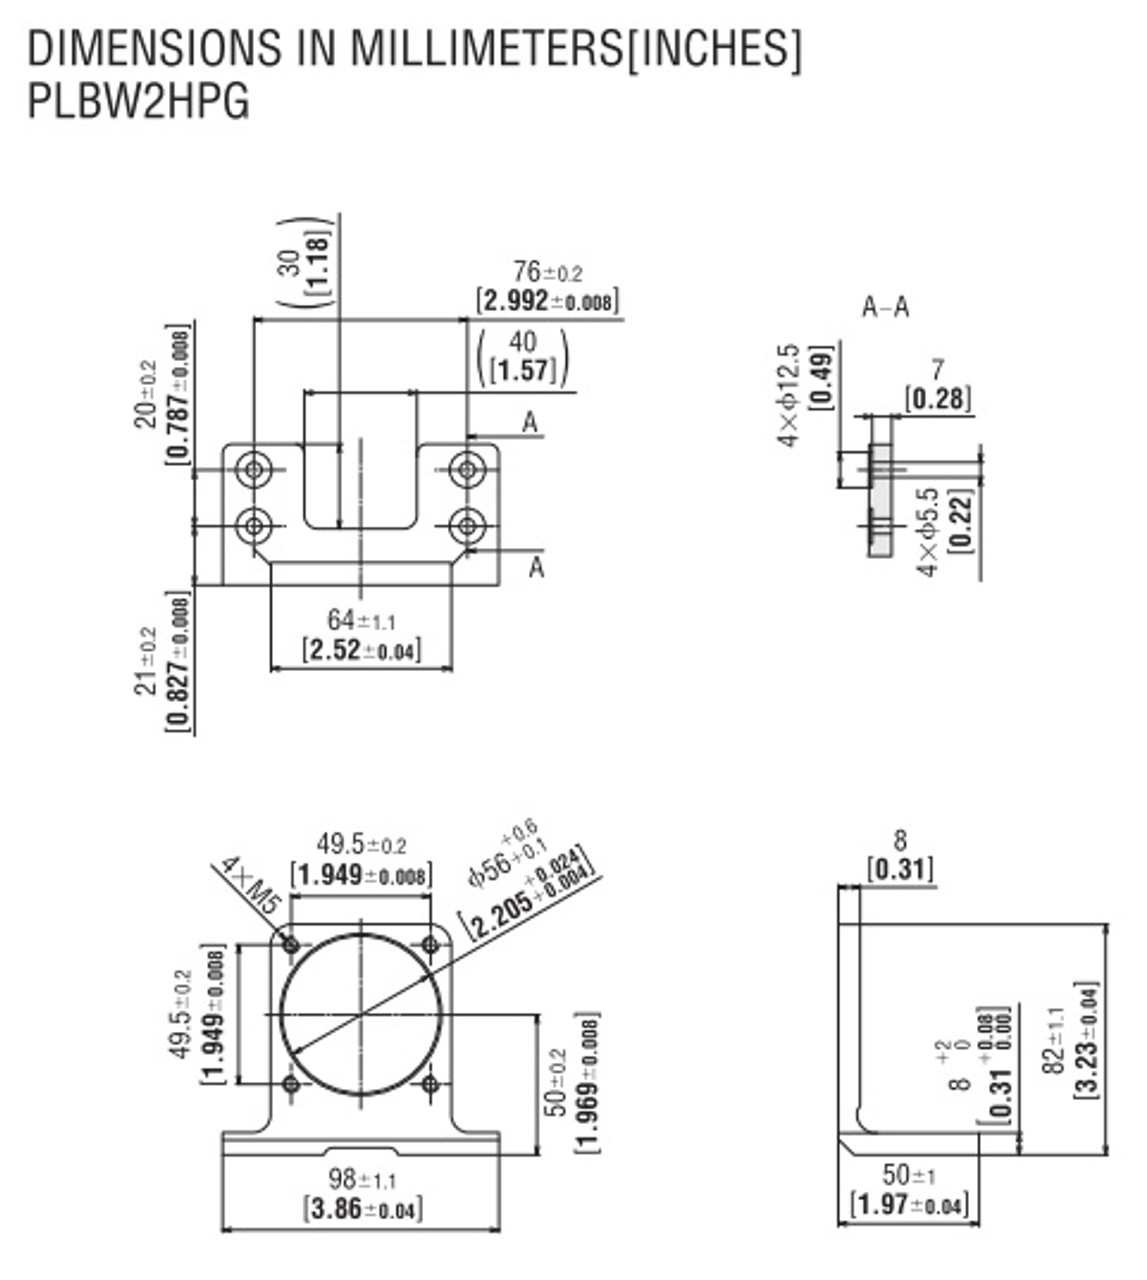 PLBW2HPG - Dimensions